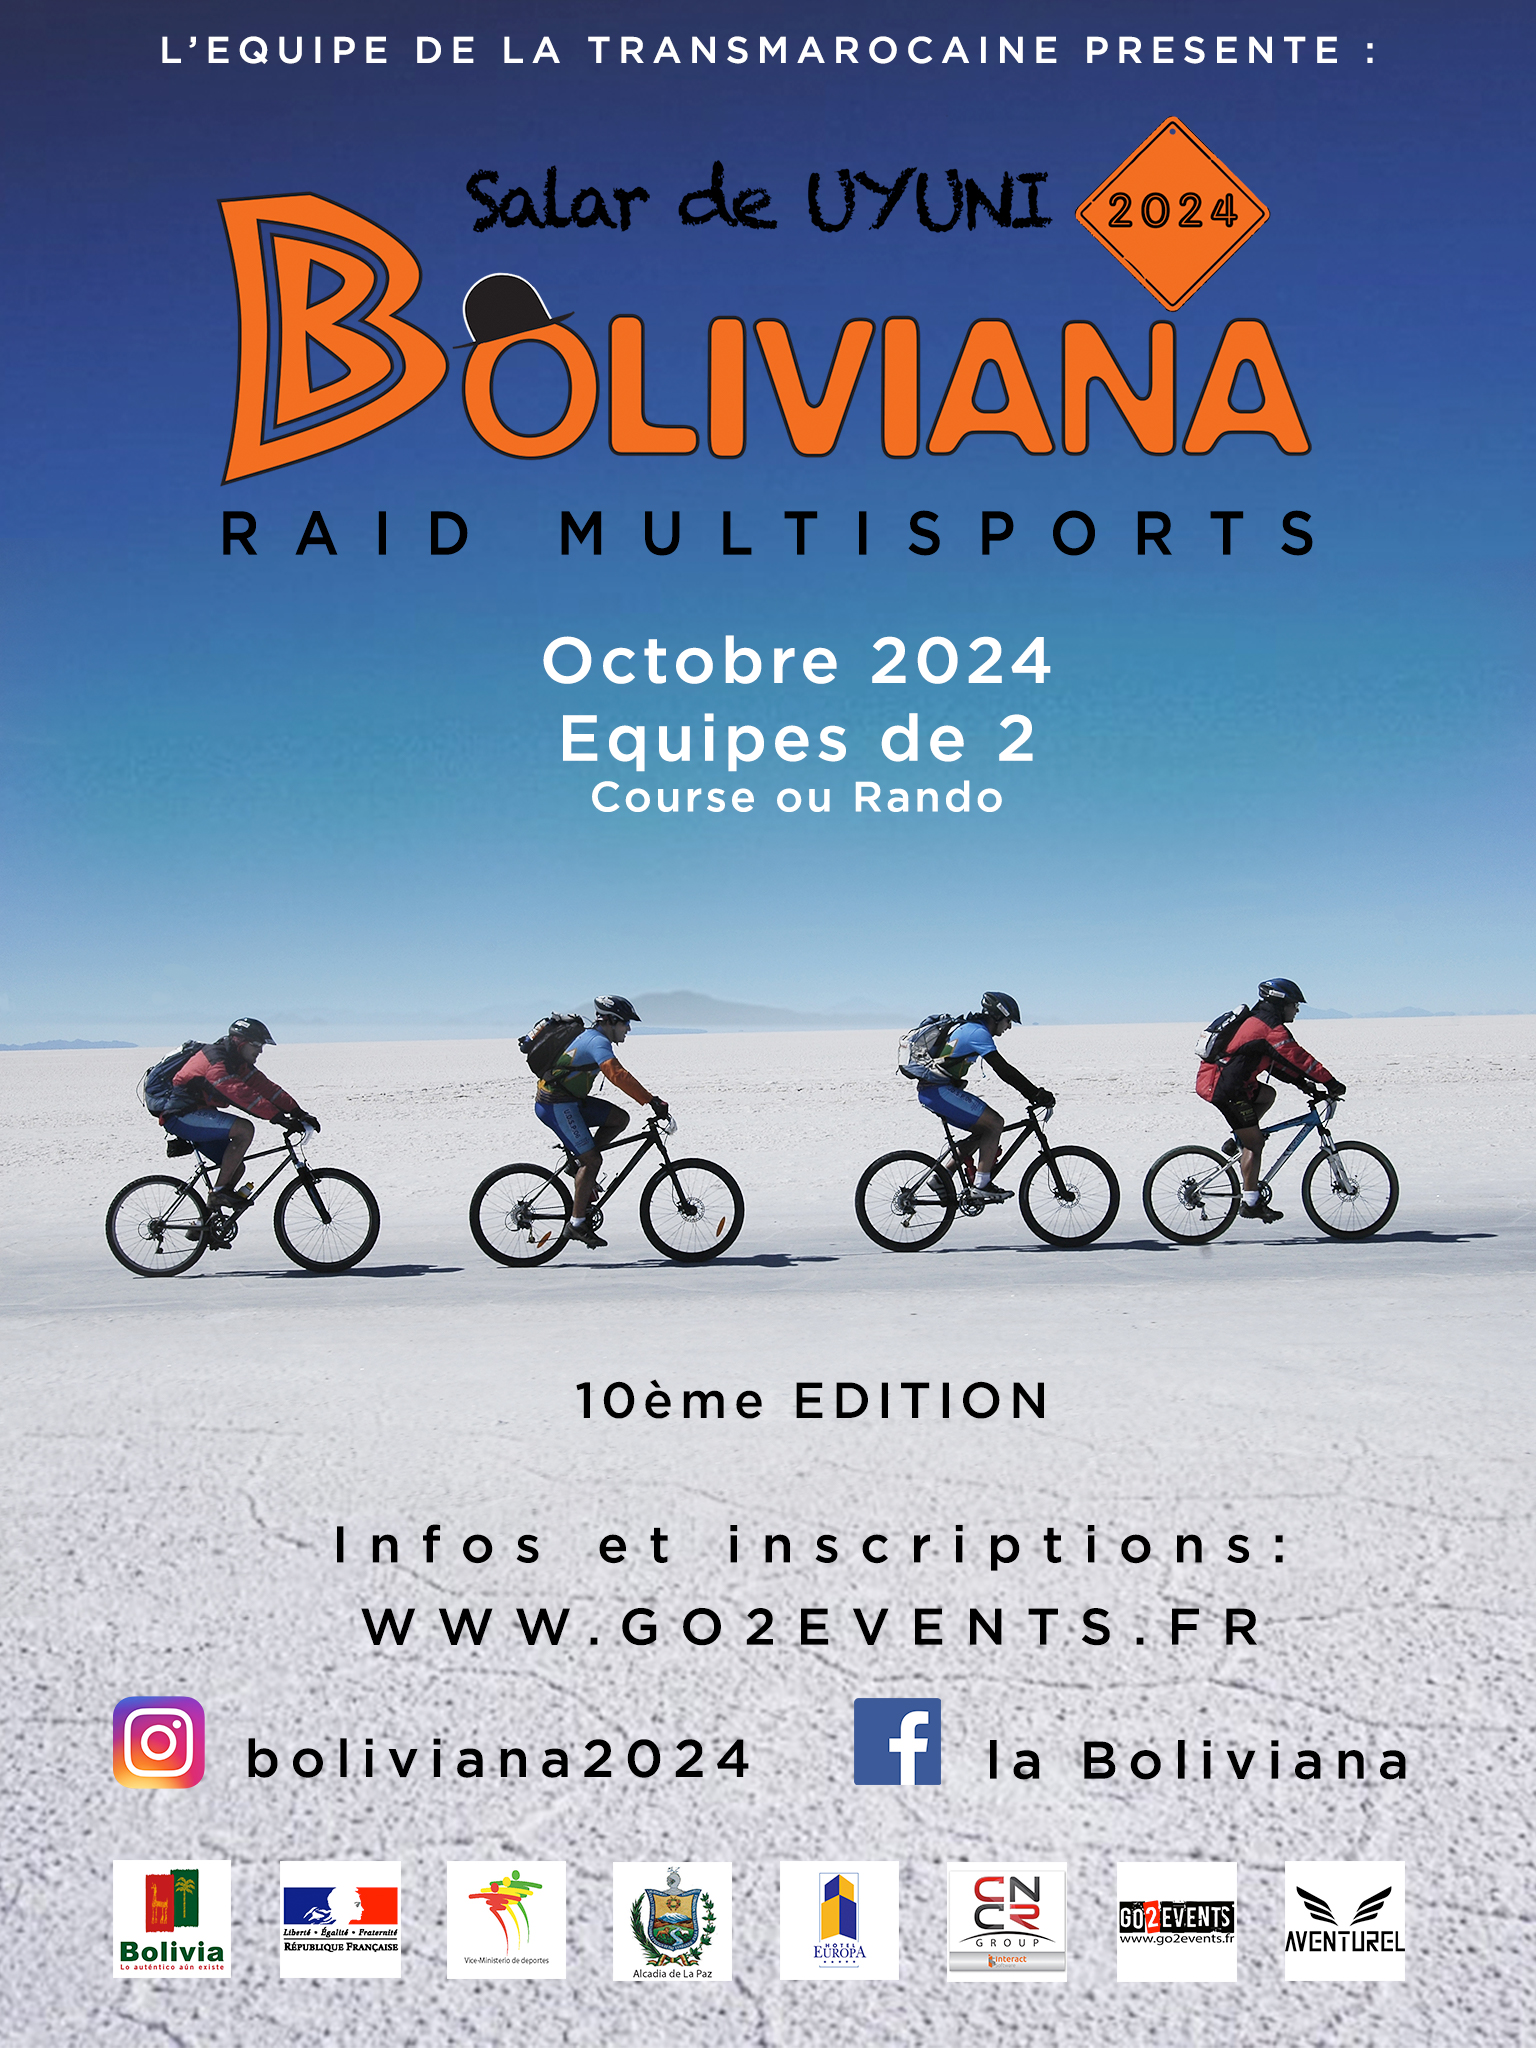 Flyer BOLIVIANA 2024 - GO2EVENTS